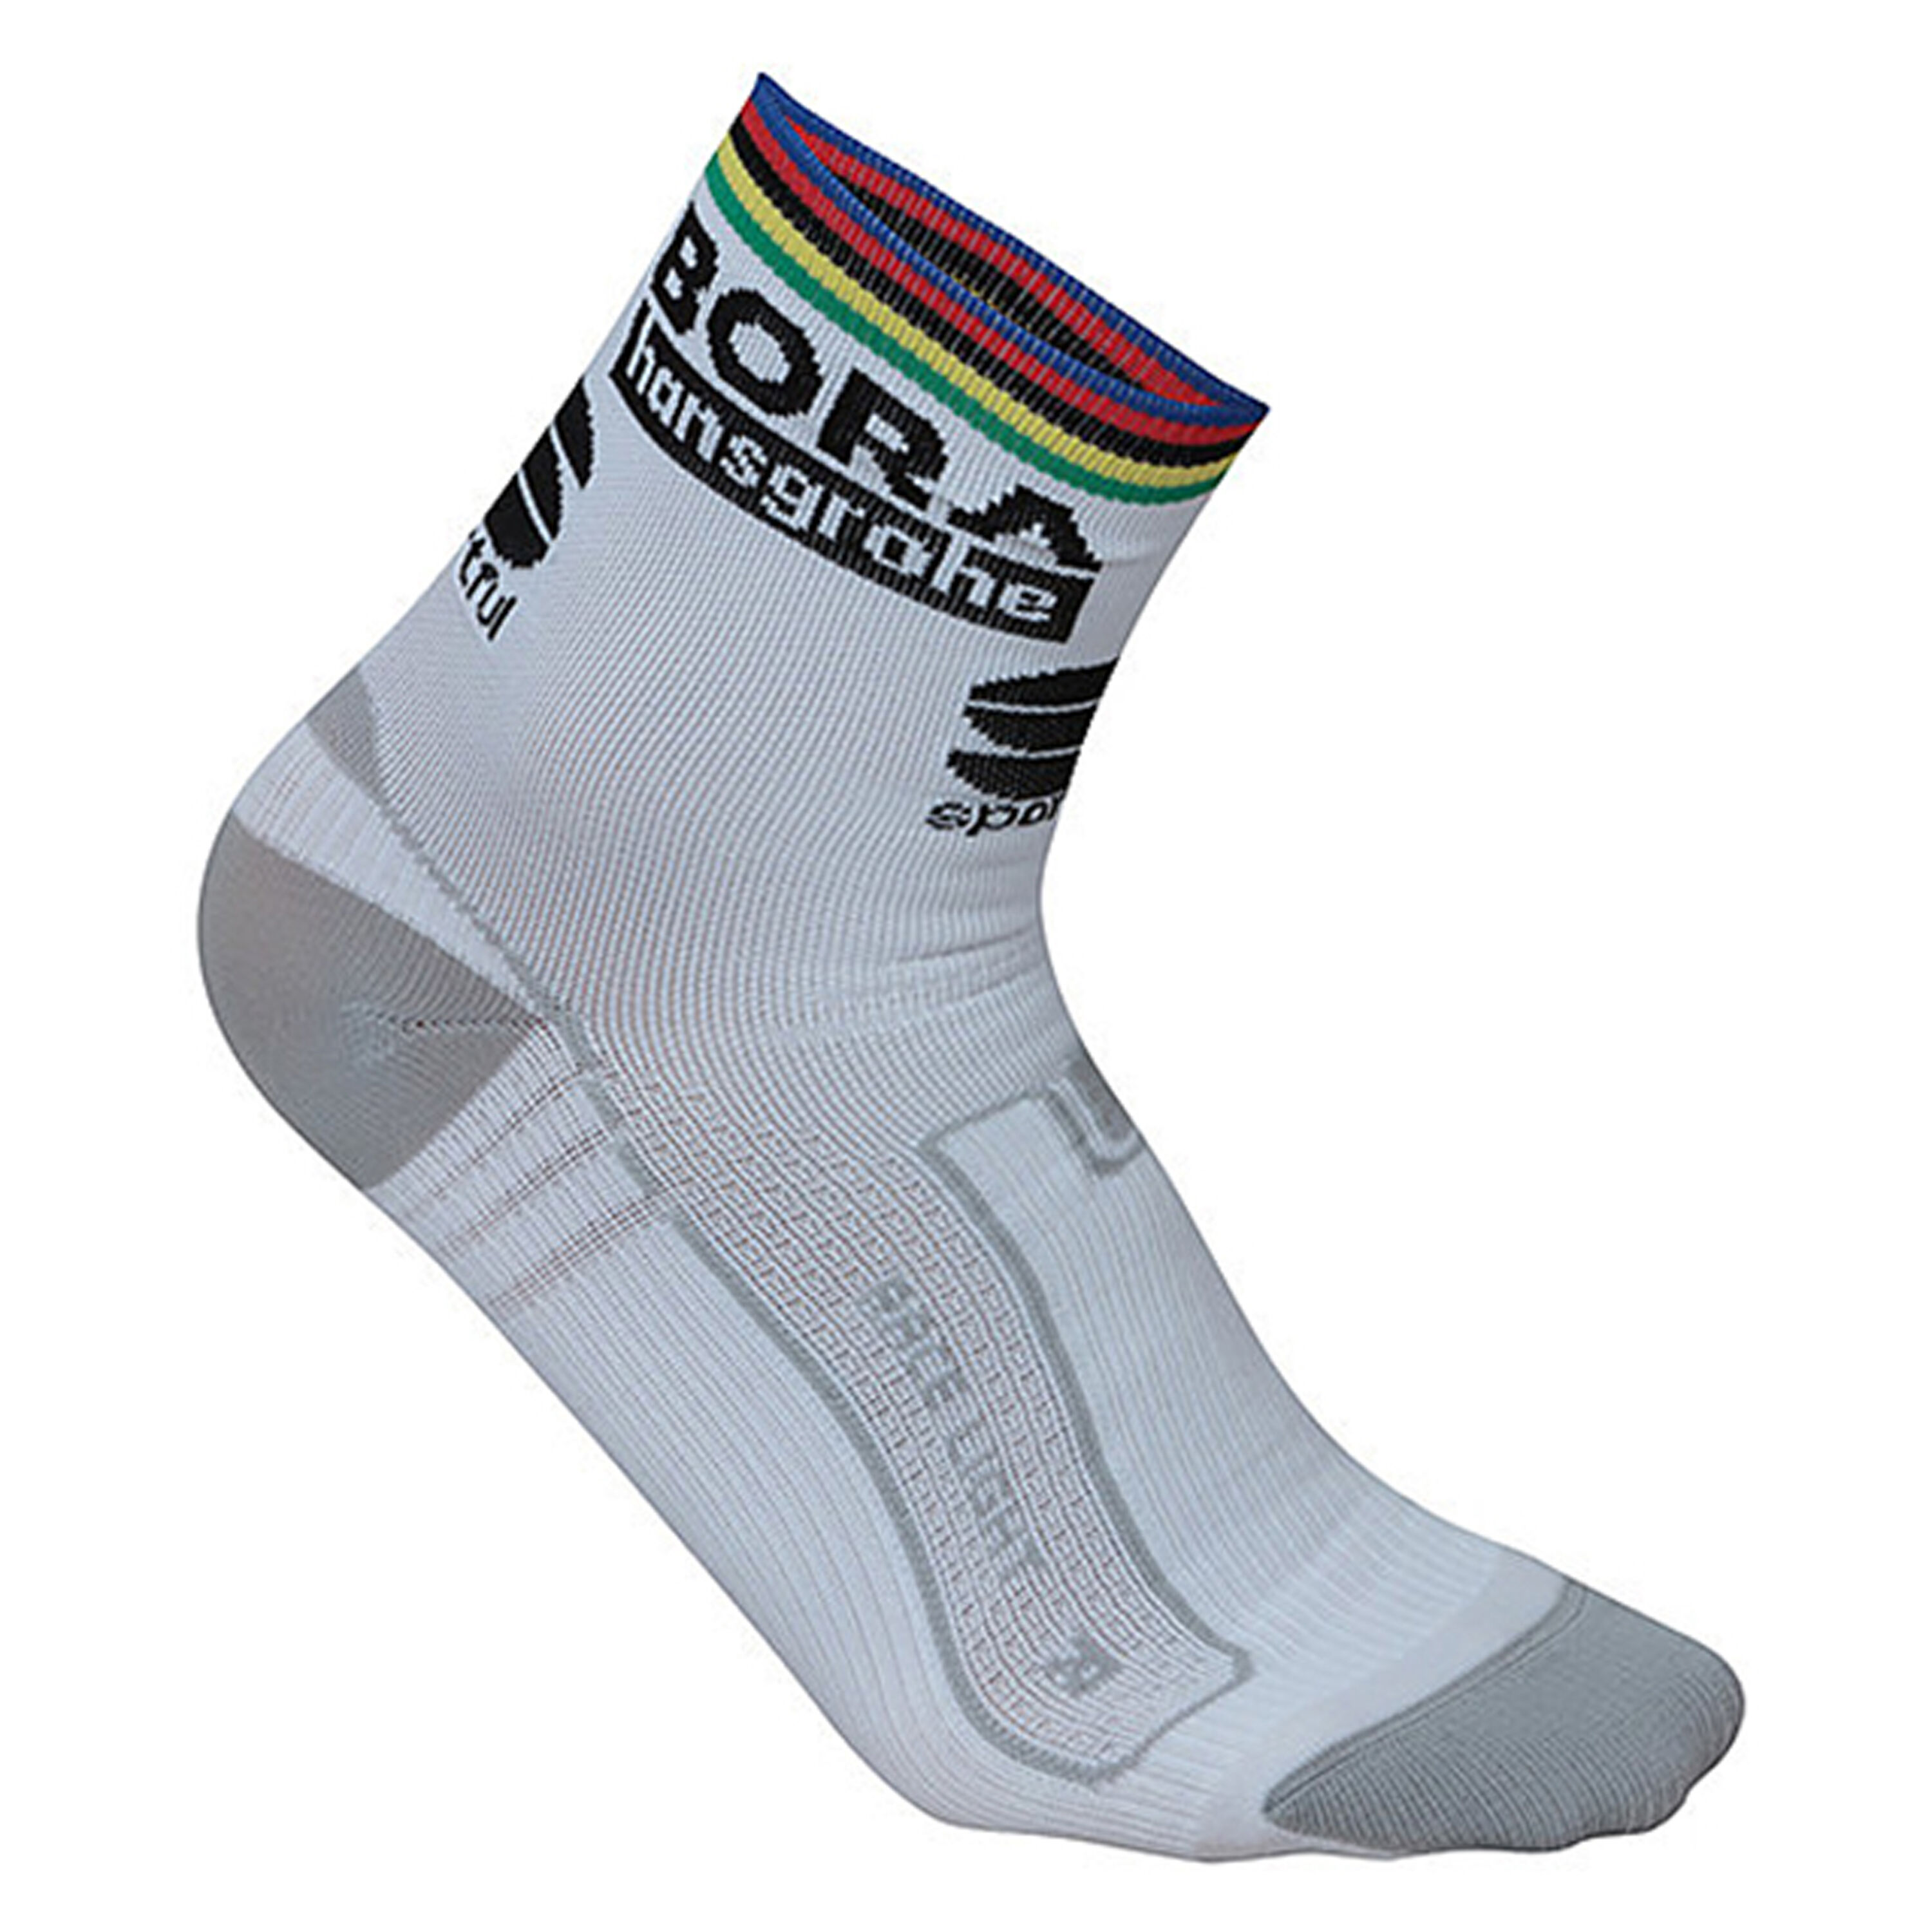 Sportful Team Bora Hansgrohe Sagan World Champion socks LordGun online bike store